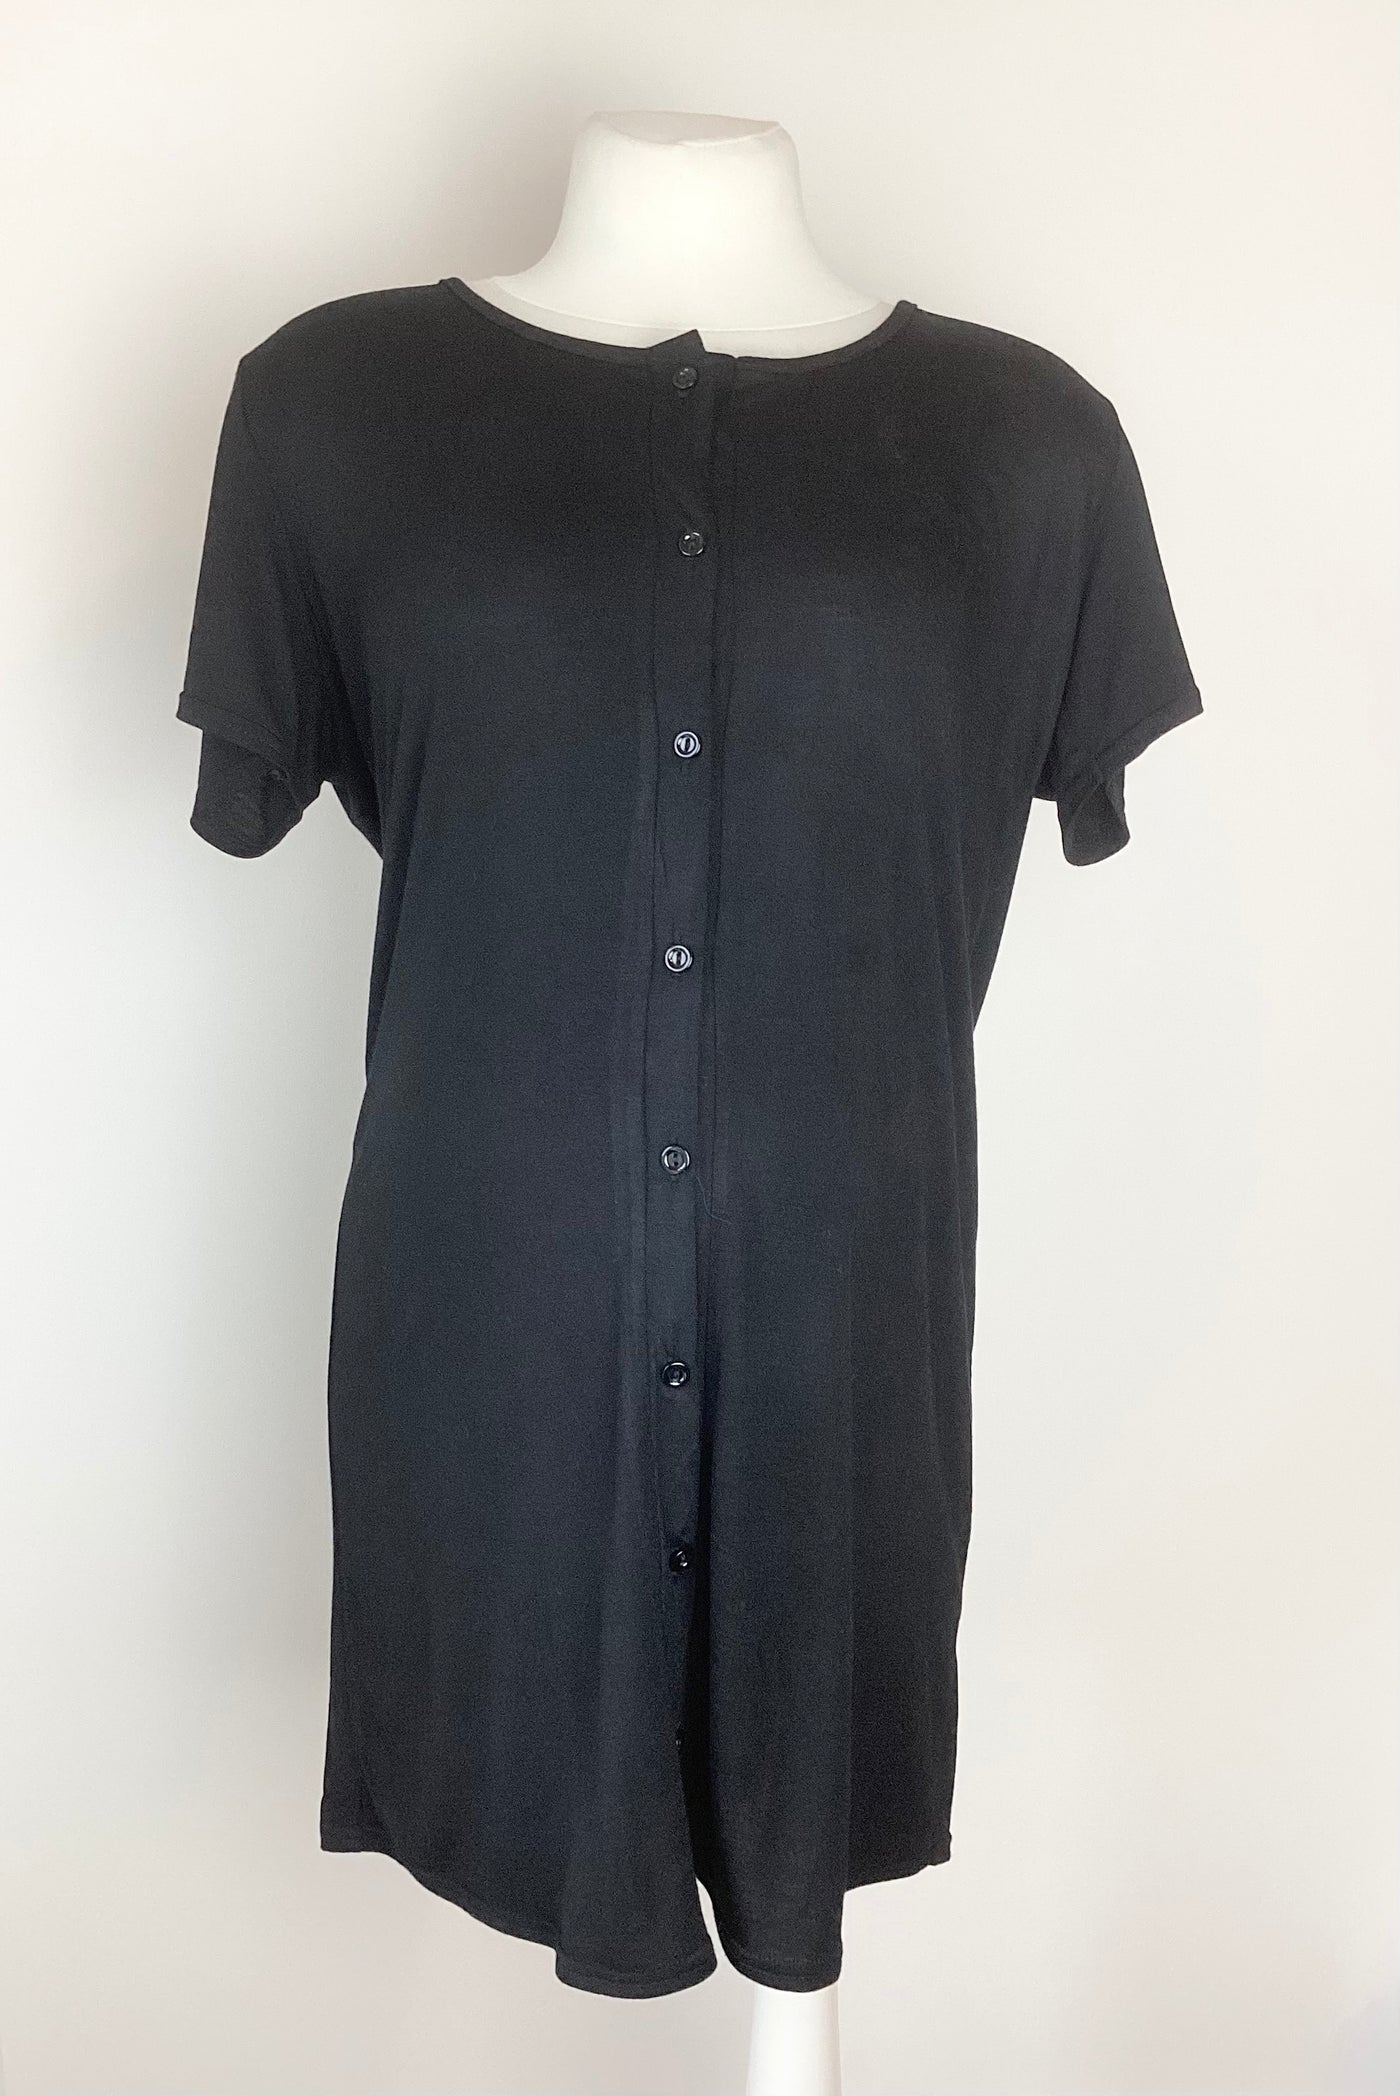 Boohoo Maternity black button front nightdress - Size 12